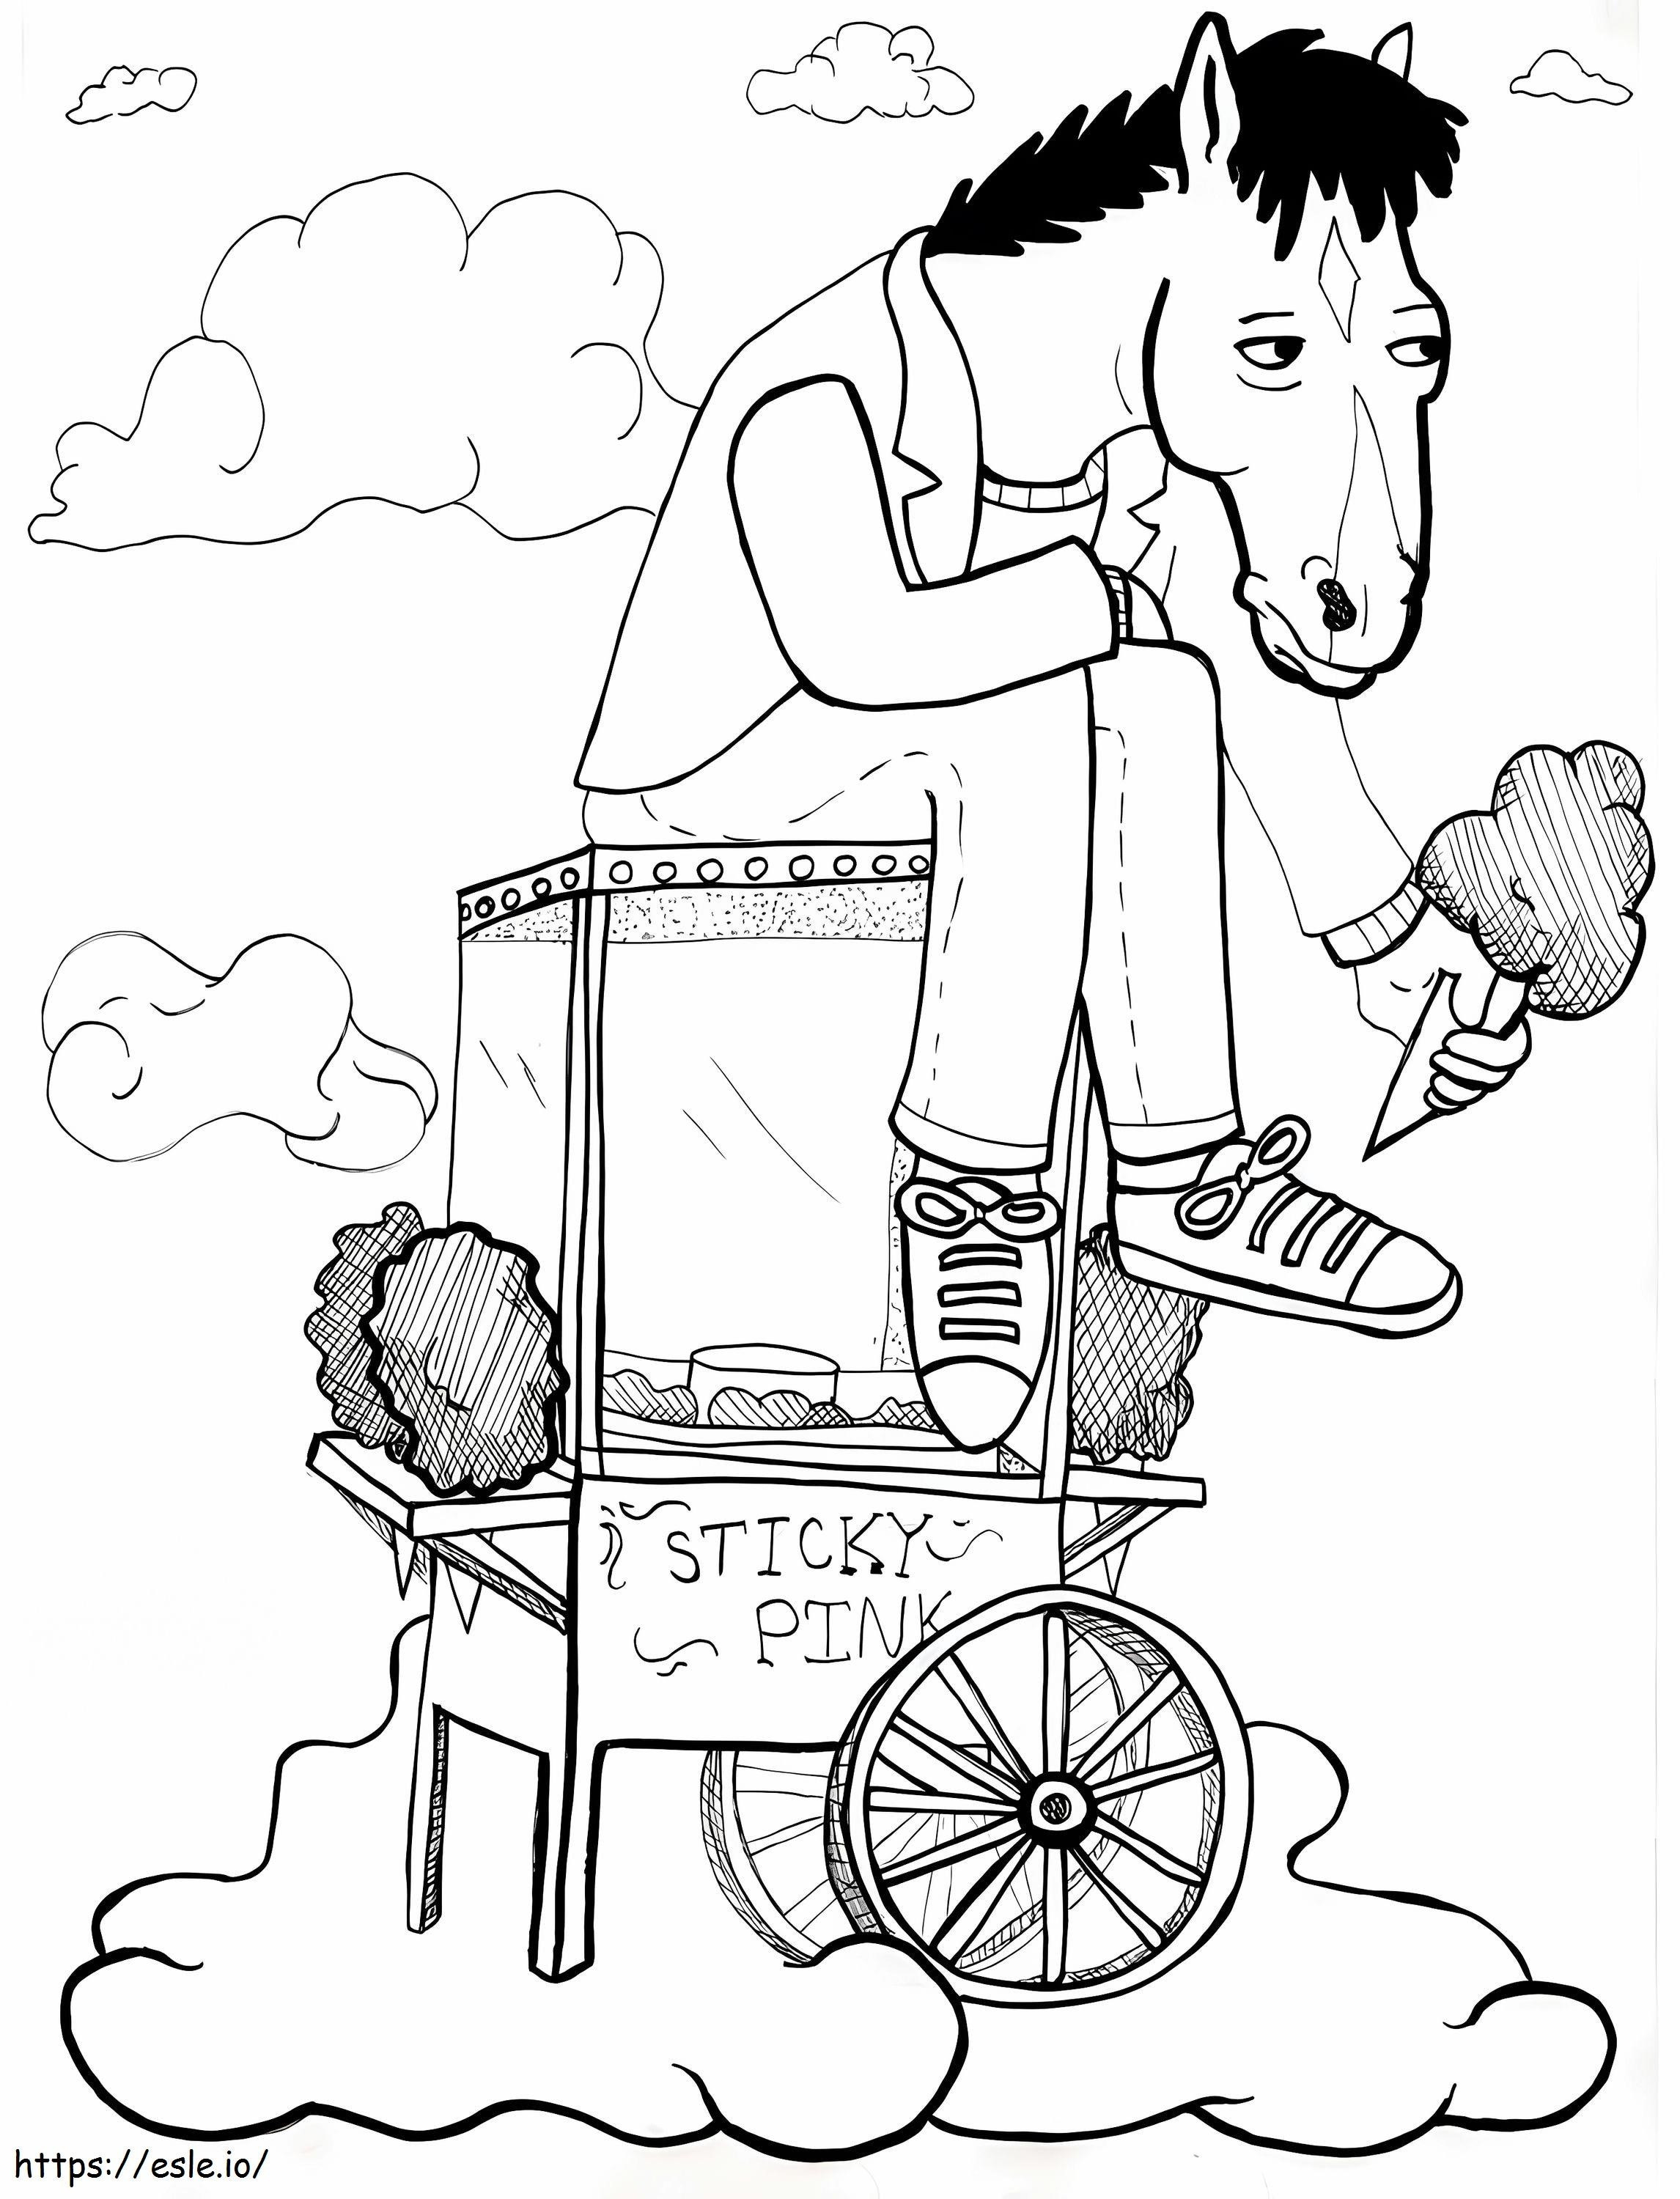 Sad BoJack Horseman coloring page